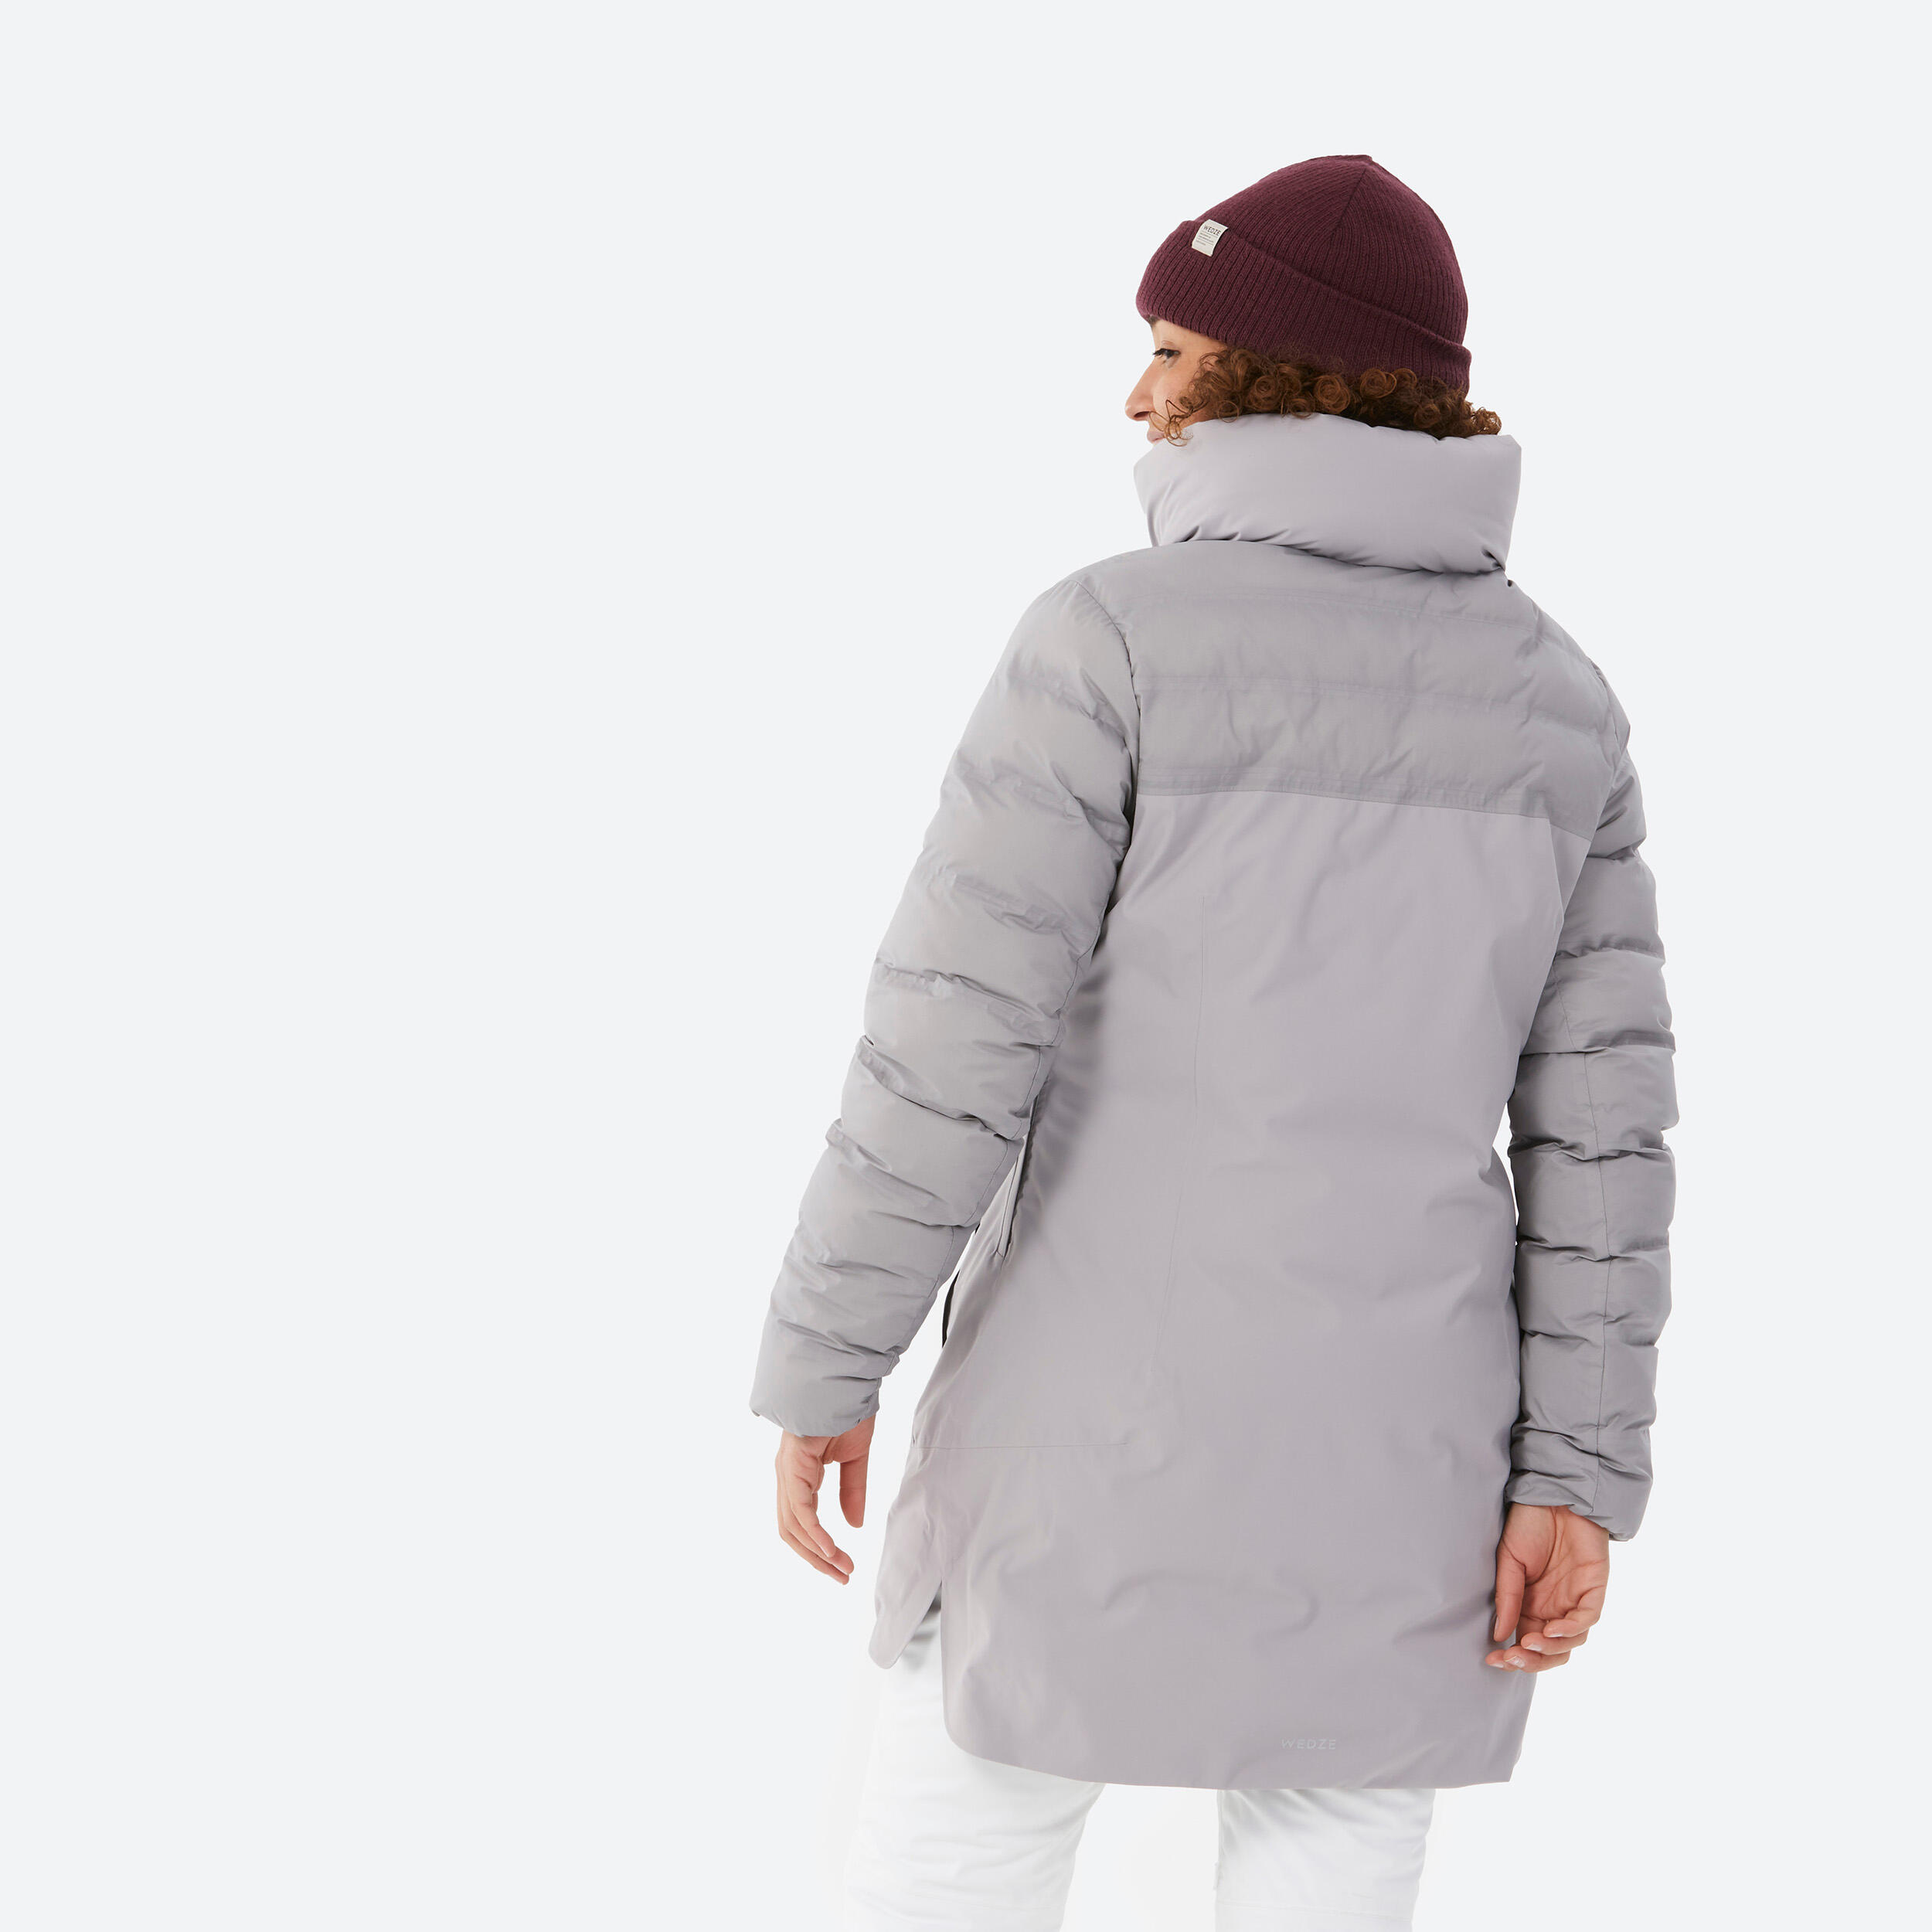 Women's long warm ski jacket 500 - light grey 5/7